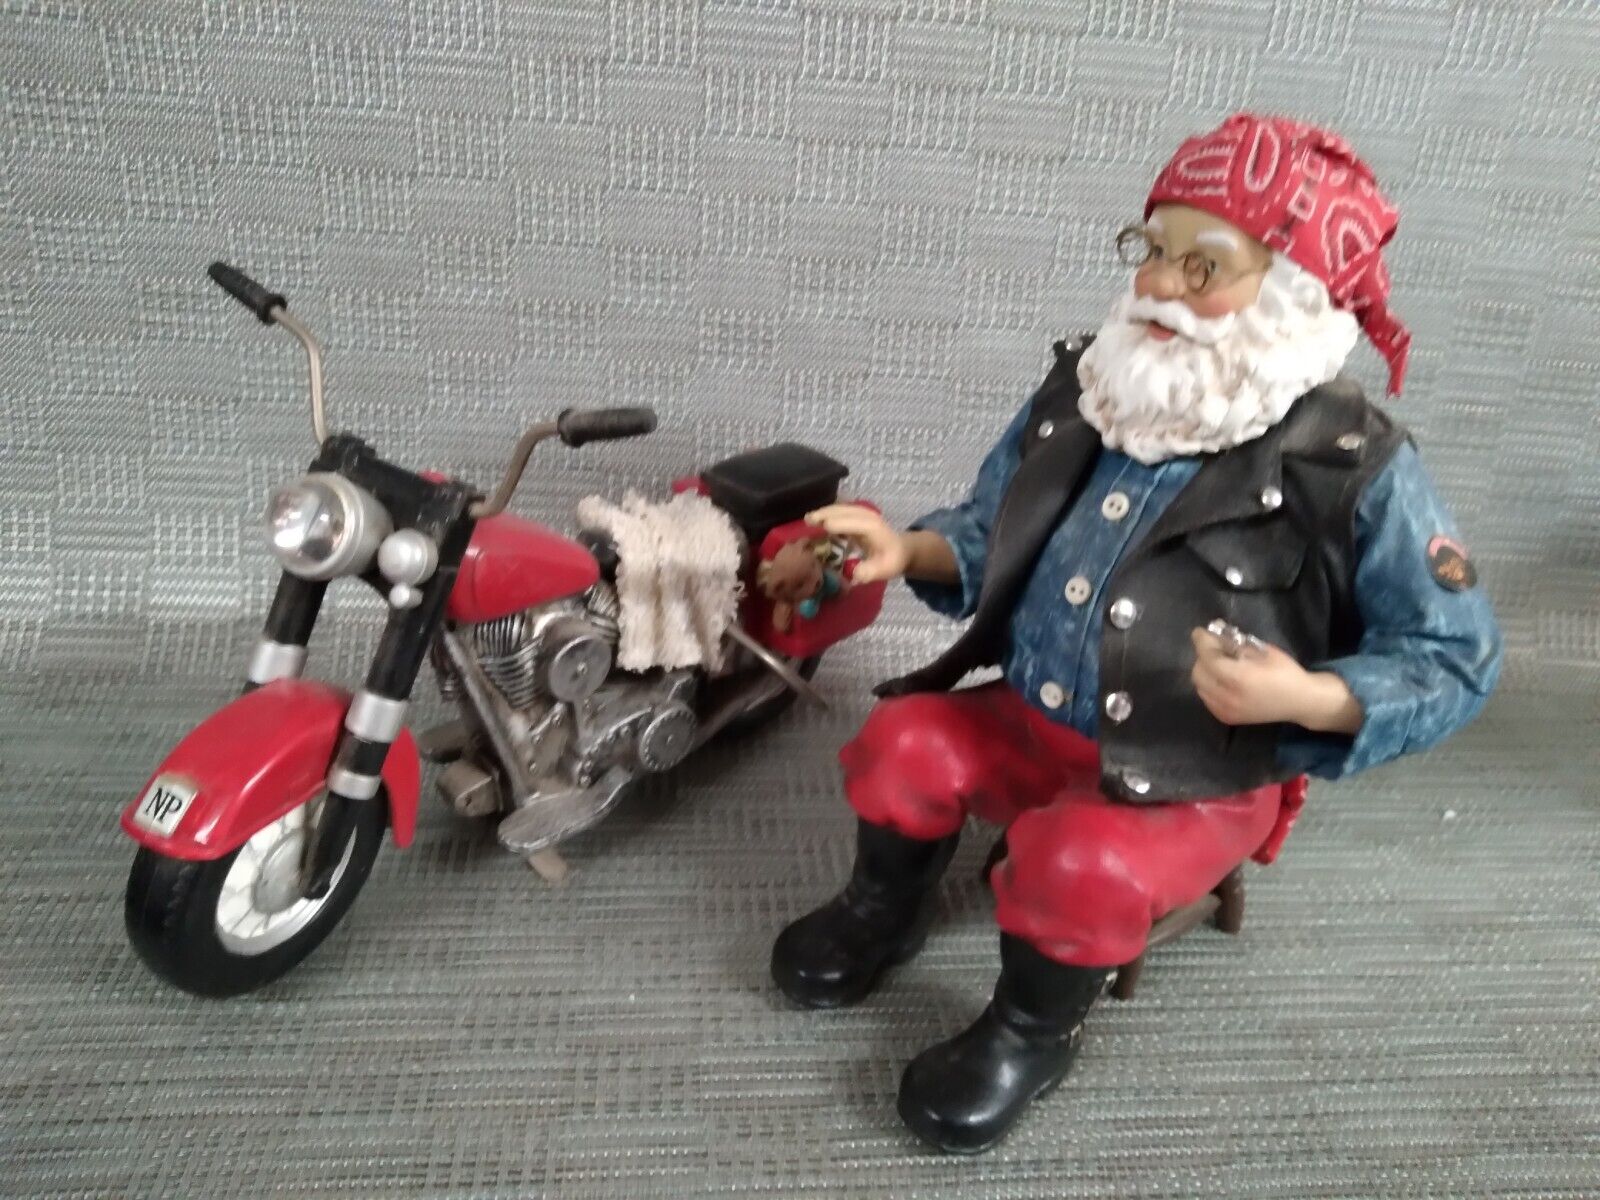 Santa and Motorcycle figure